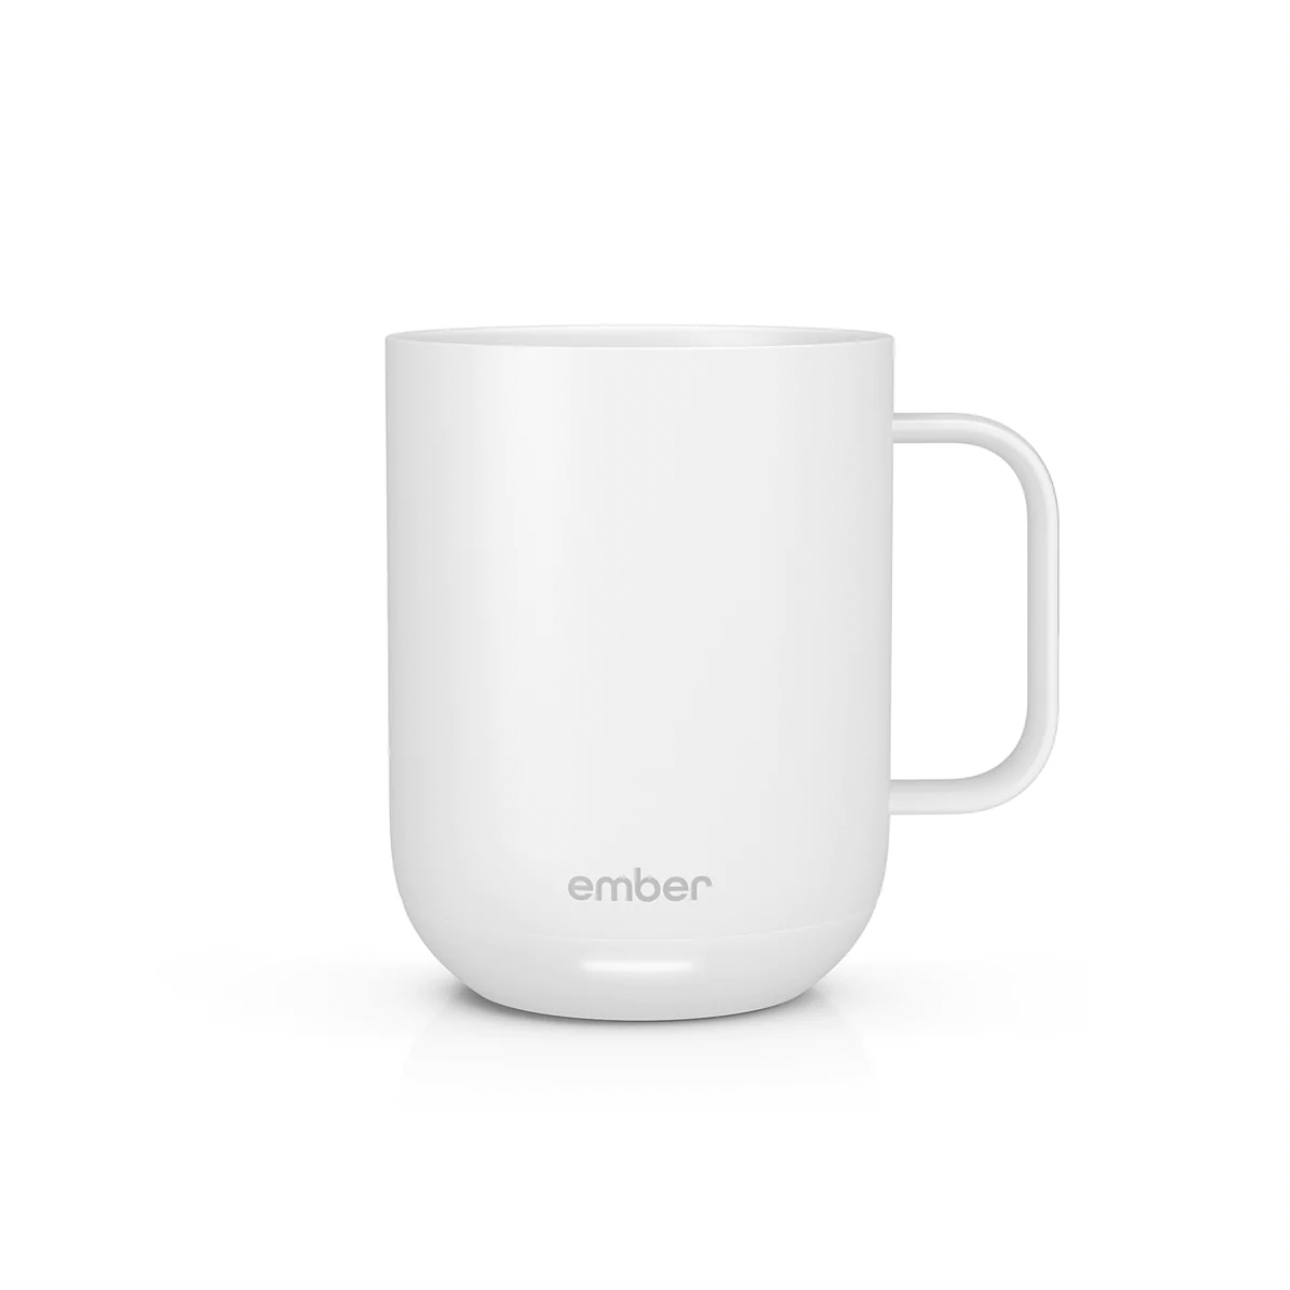 Nextmug review: Finally, a self-heating Ember Mug alternative that costs  less